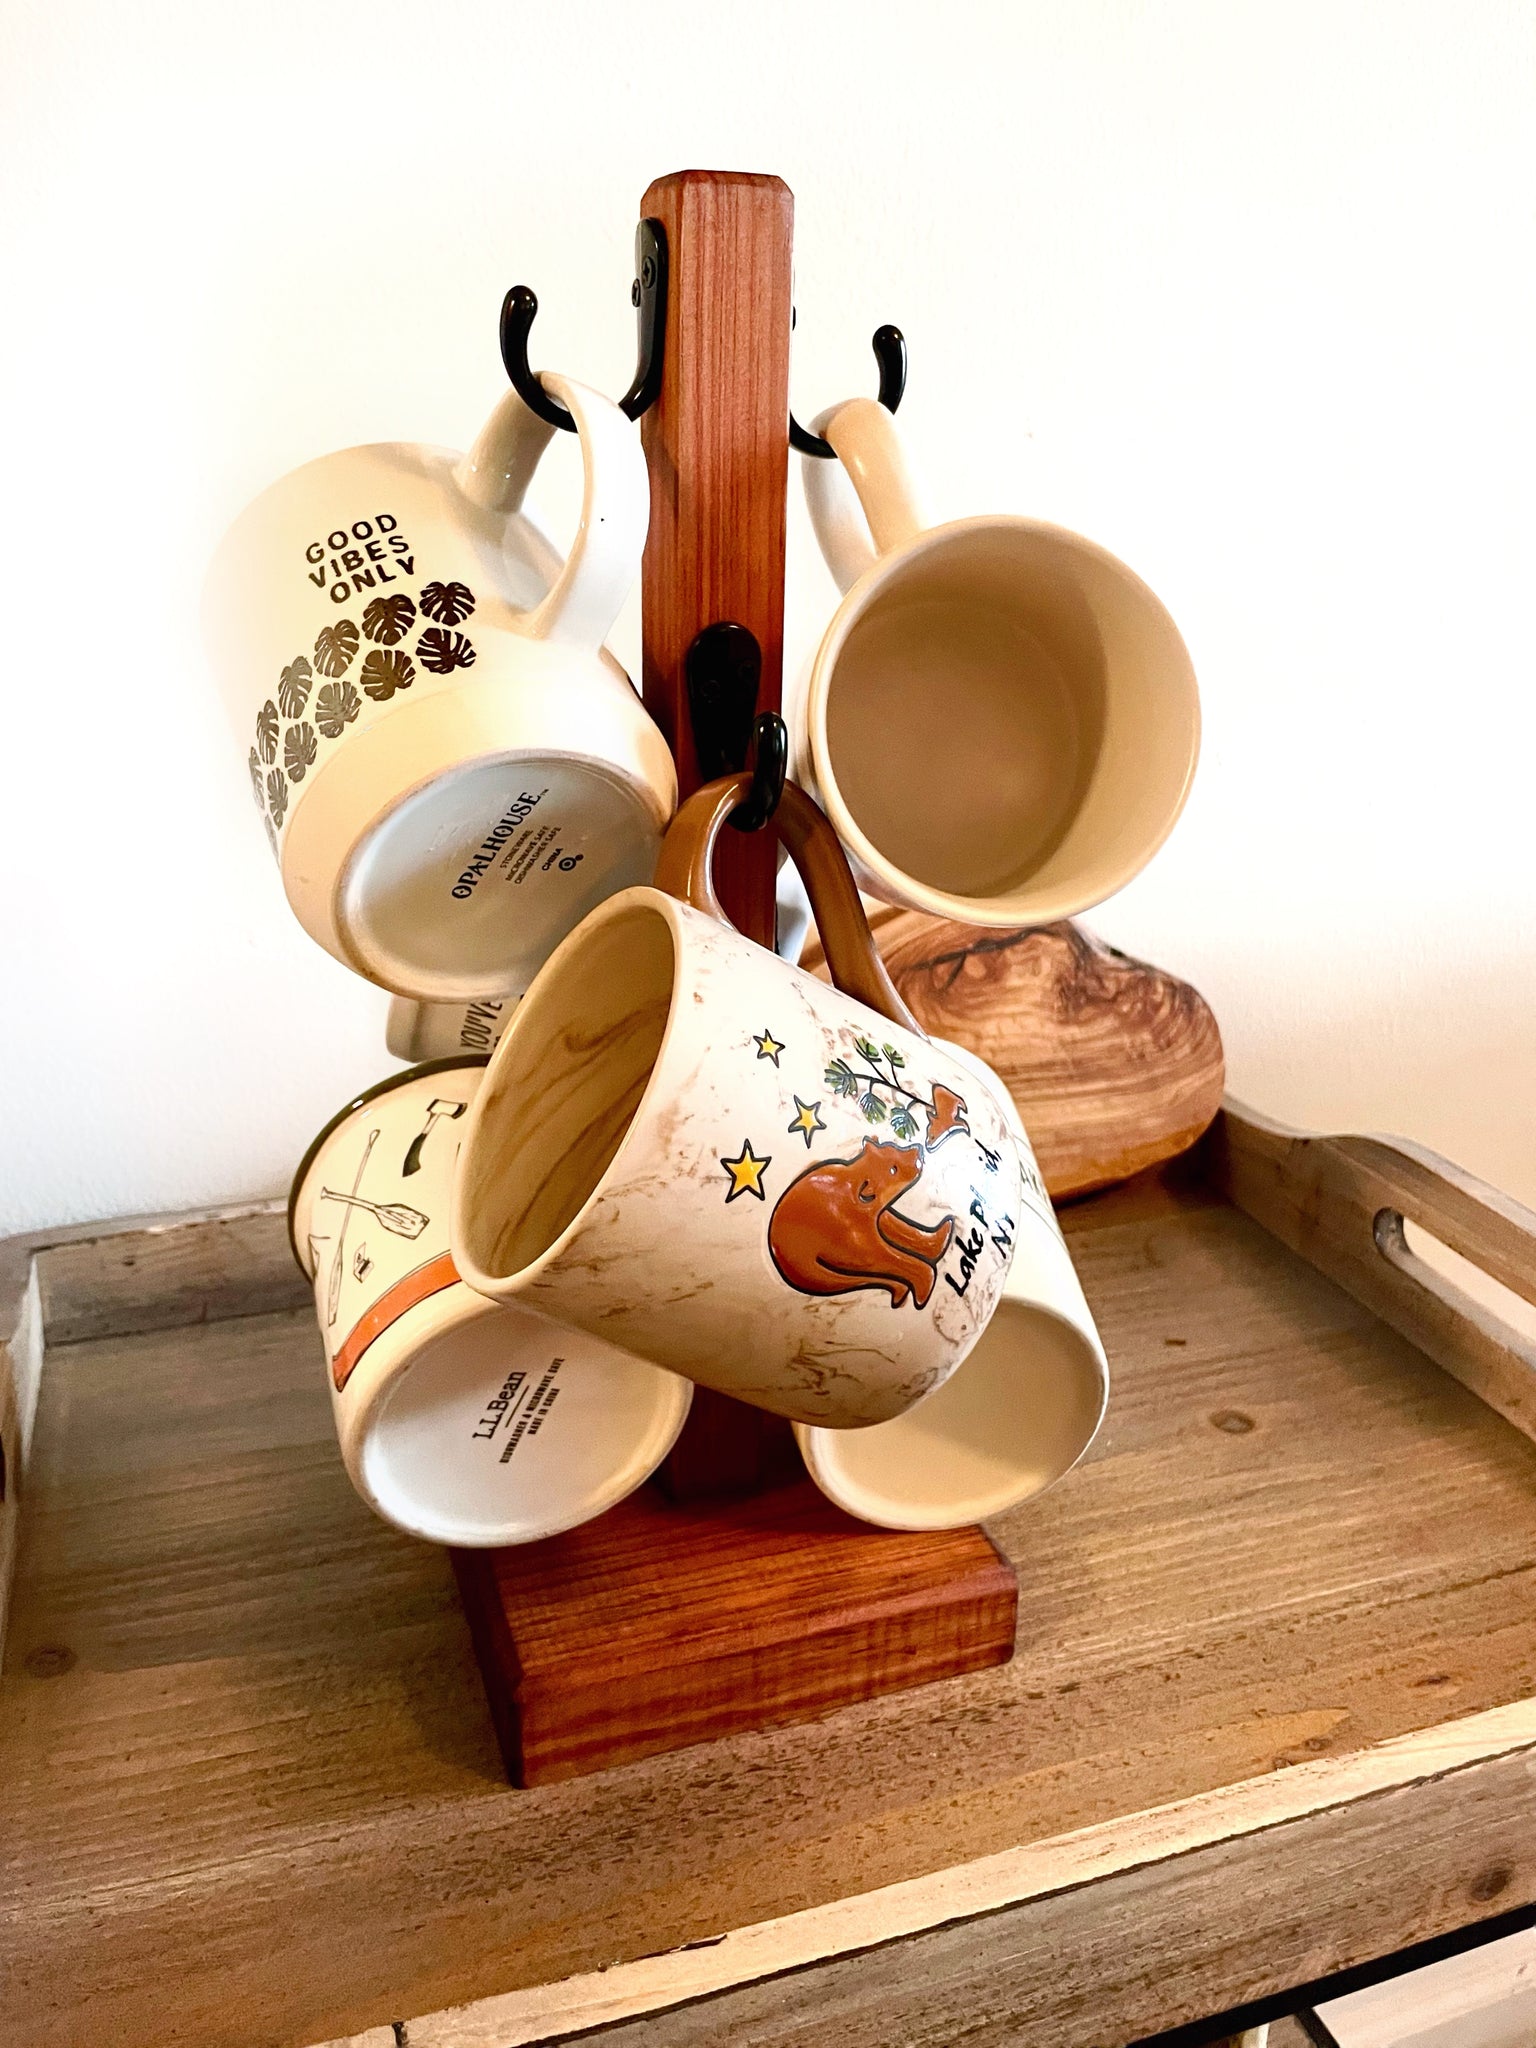 Hooshion Wooden Mug Rack Holder Stand, Coffee Mug Holder Stand, Mug Tree  Holder with 6 Hooks Cups Or…See more Hooshion Wooden Mug Rack Holder Stand